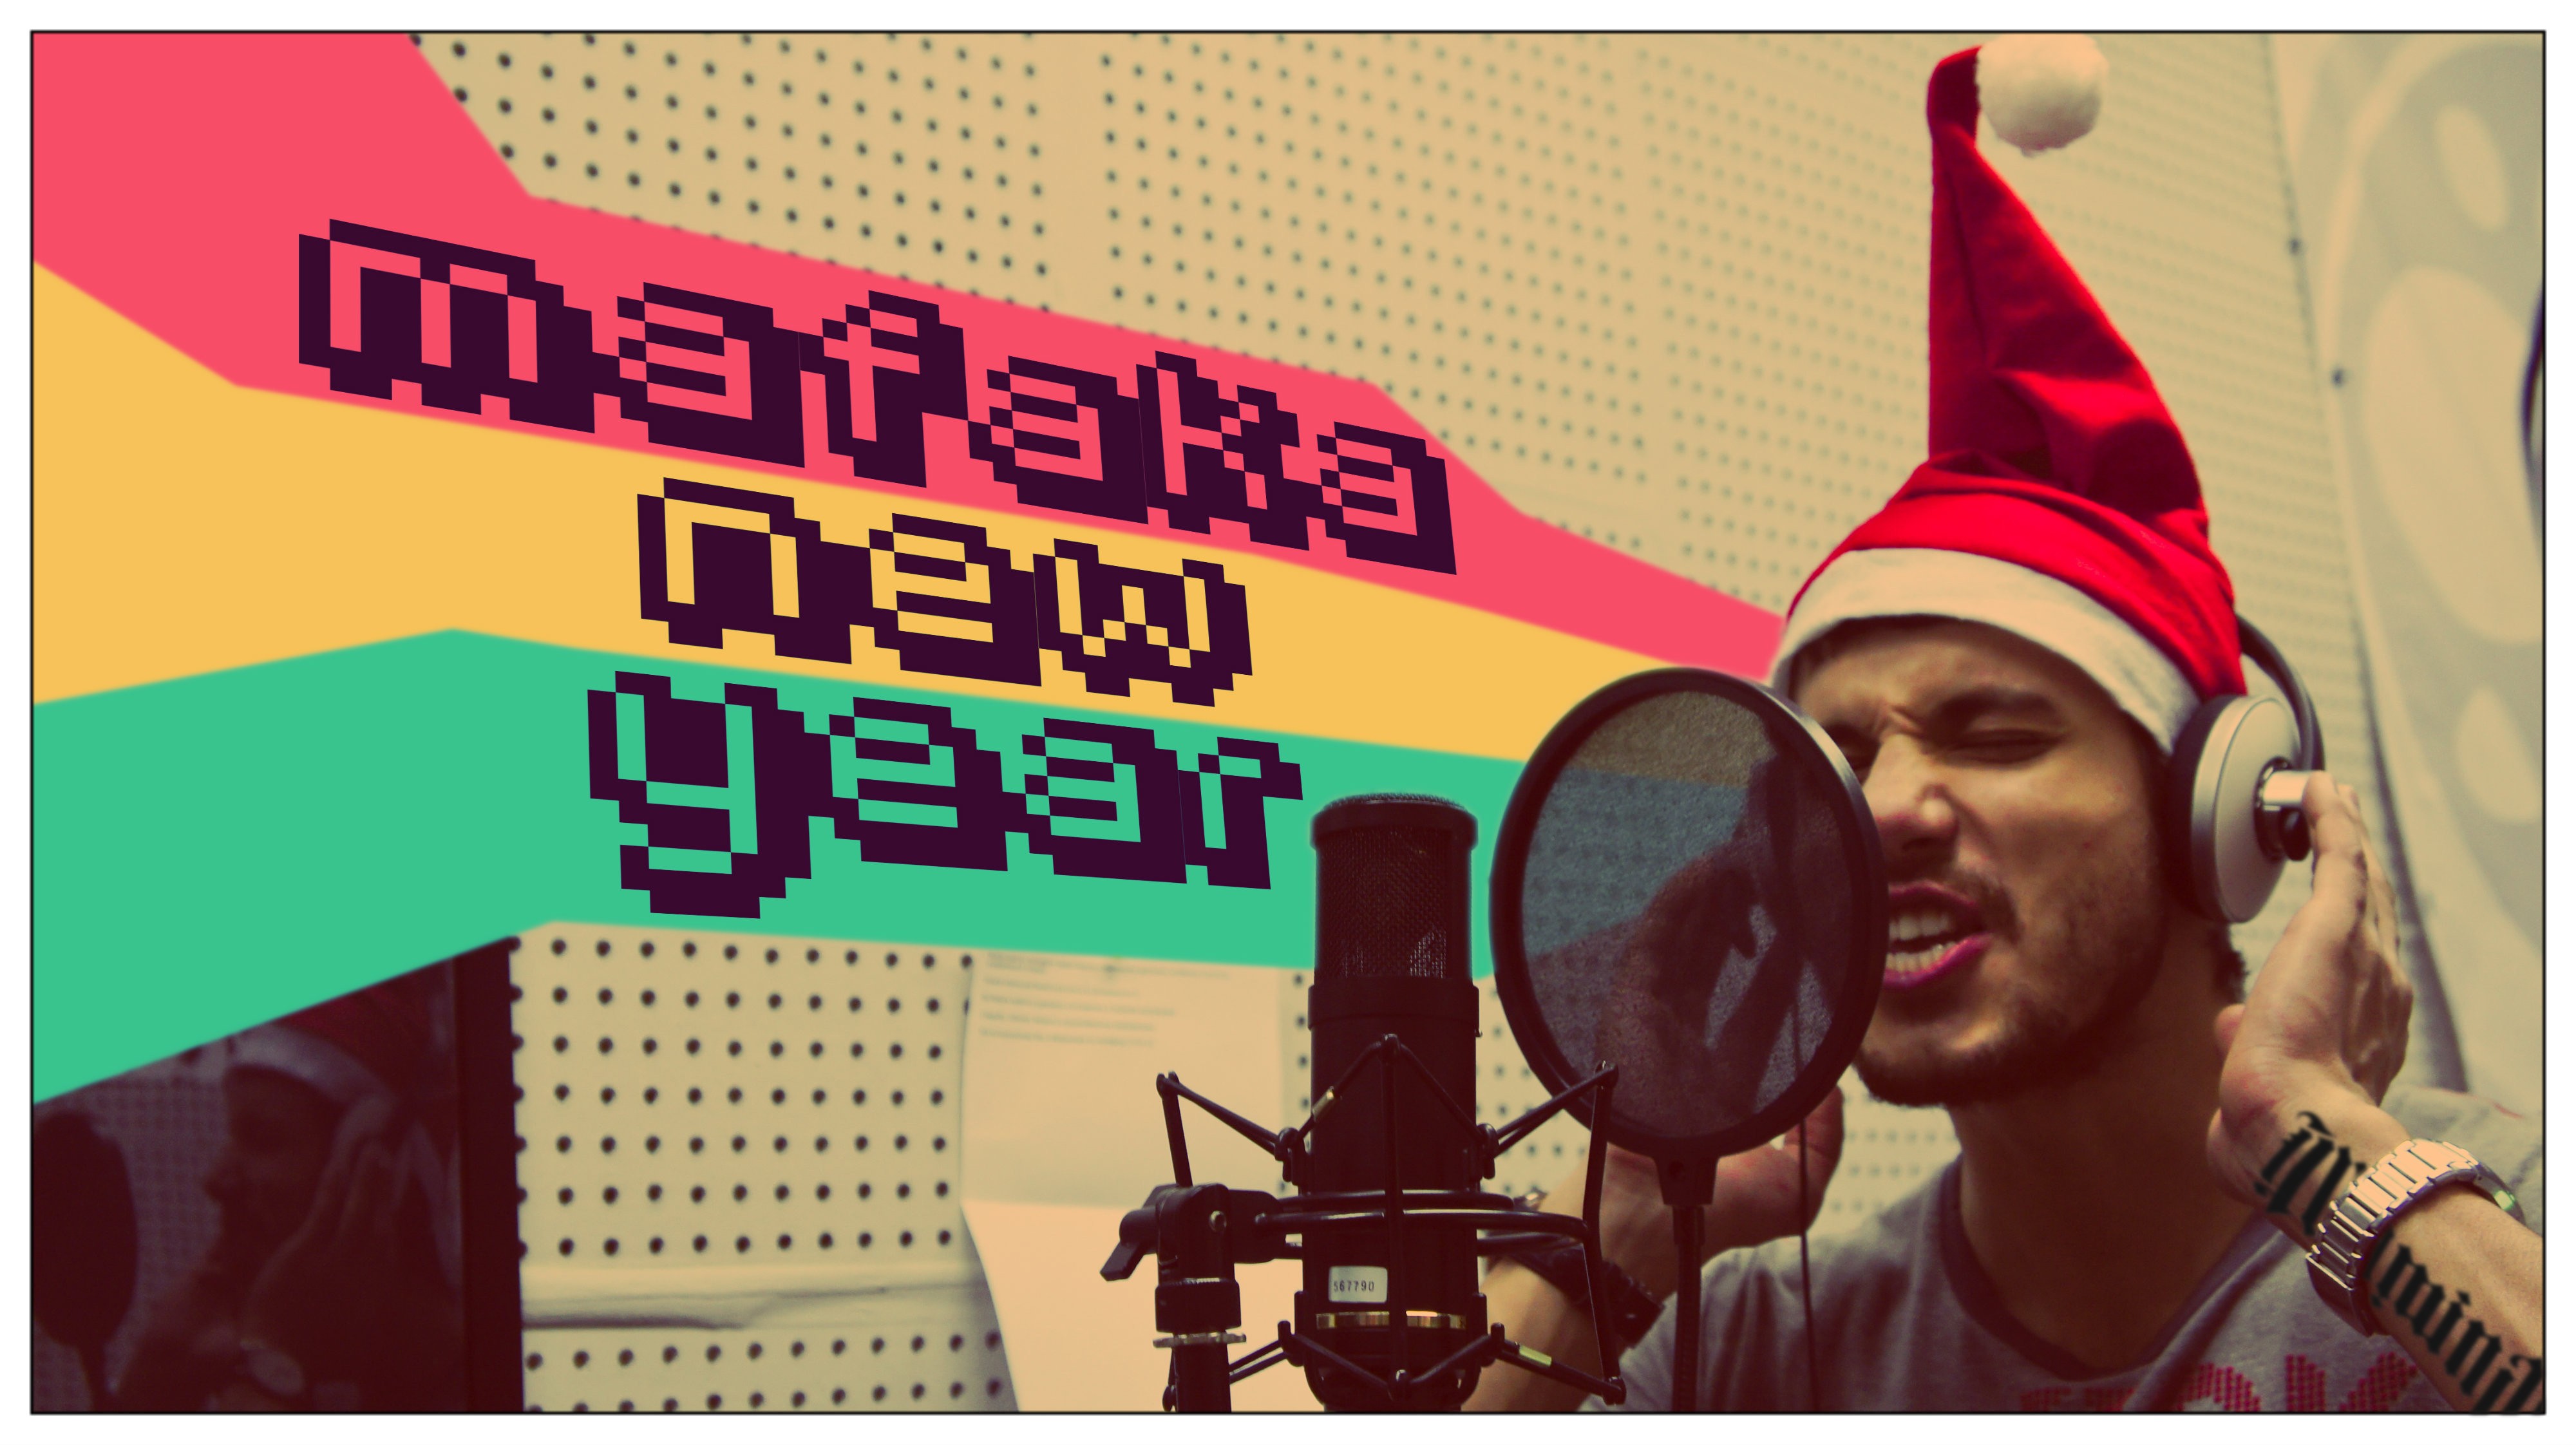 tattoos, studio, New Year, microphones, Santa Claus hat - desktop wallpaper